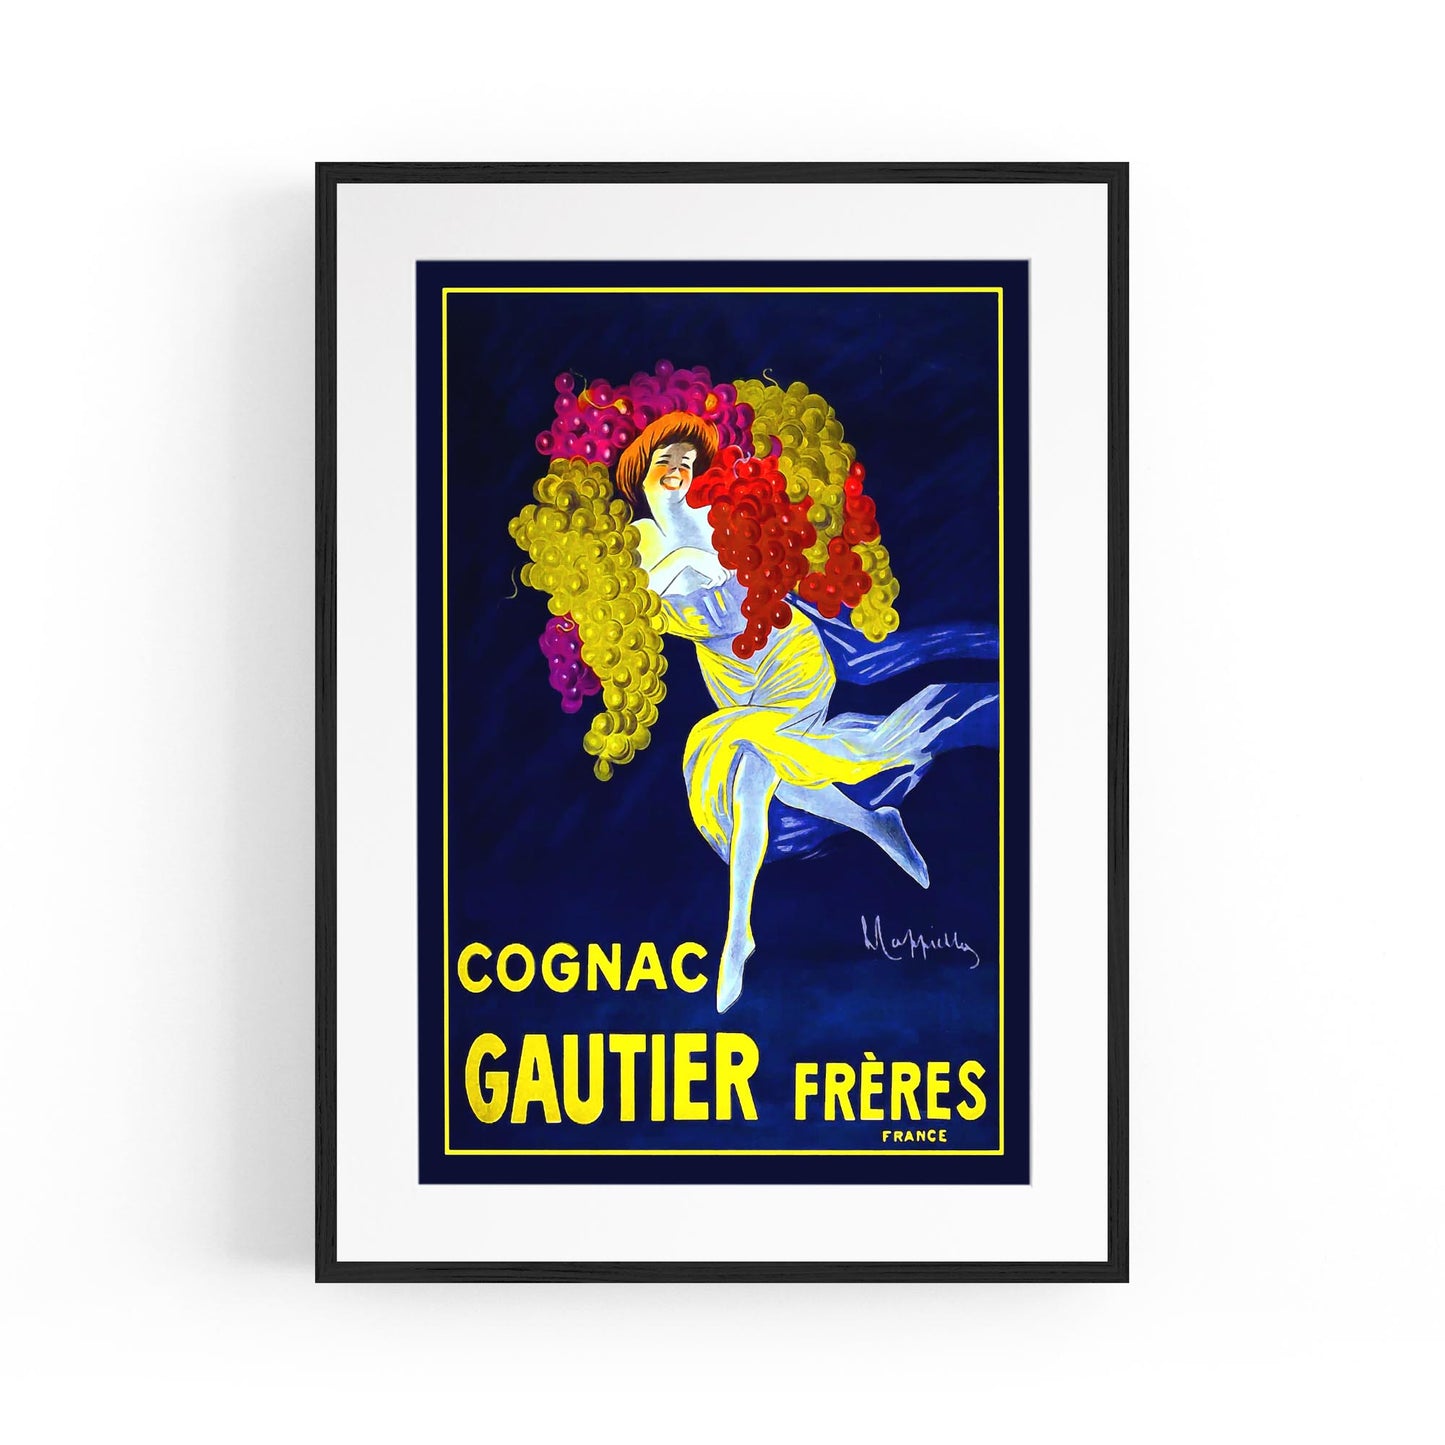 Gautier Freres Cognac by Leonetto Cappiello | Framed Vintage Poster